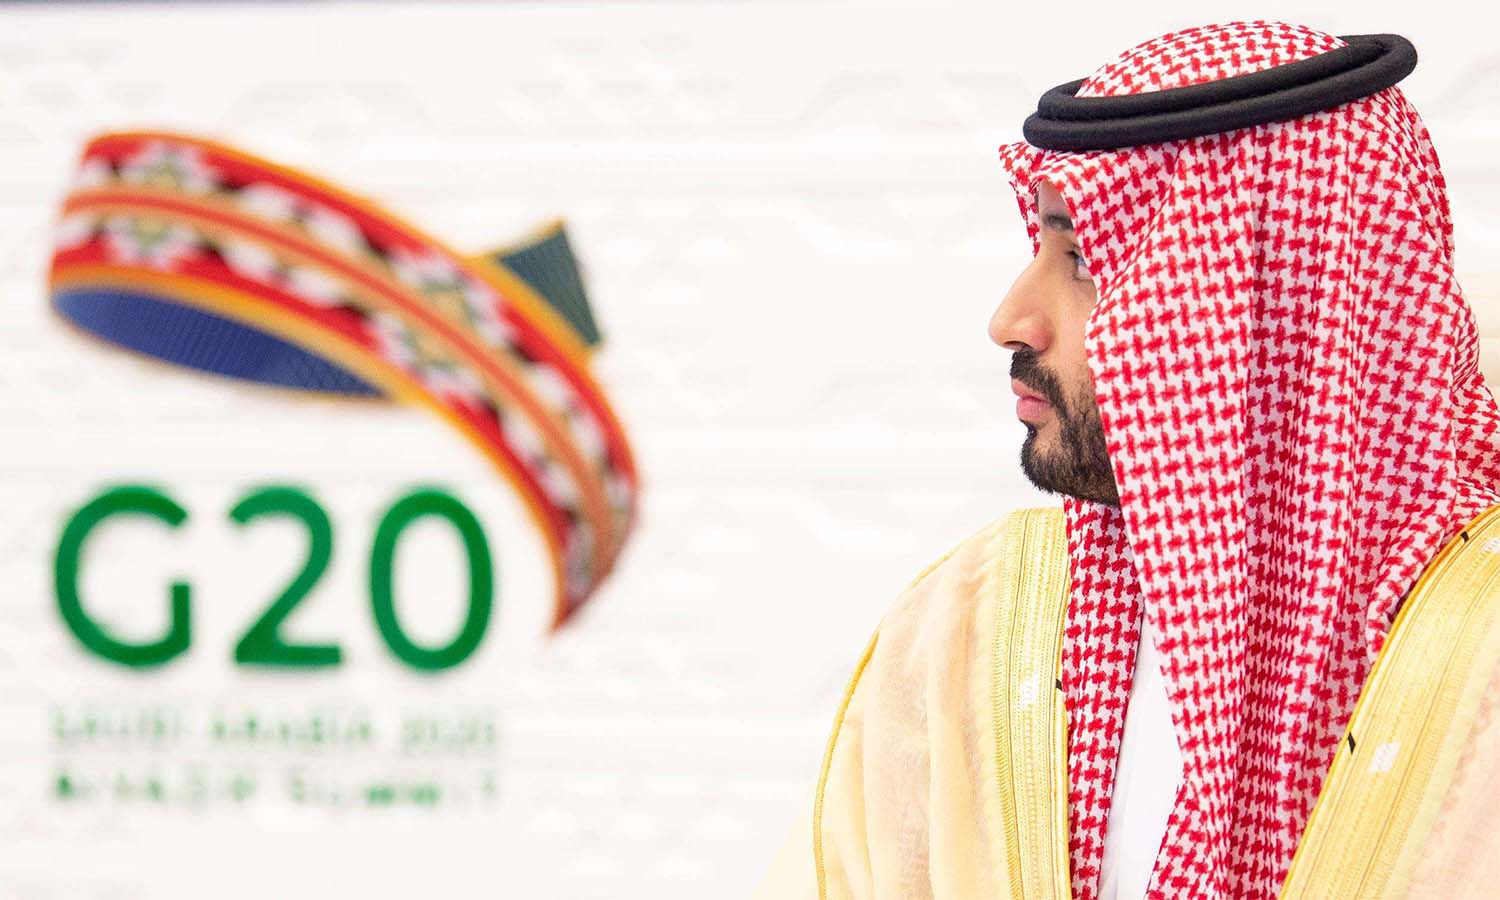 Saudi Arabia presided the virtual G20 summit in November 2020